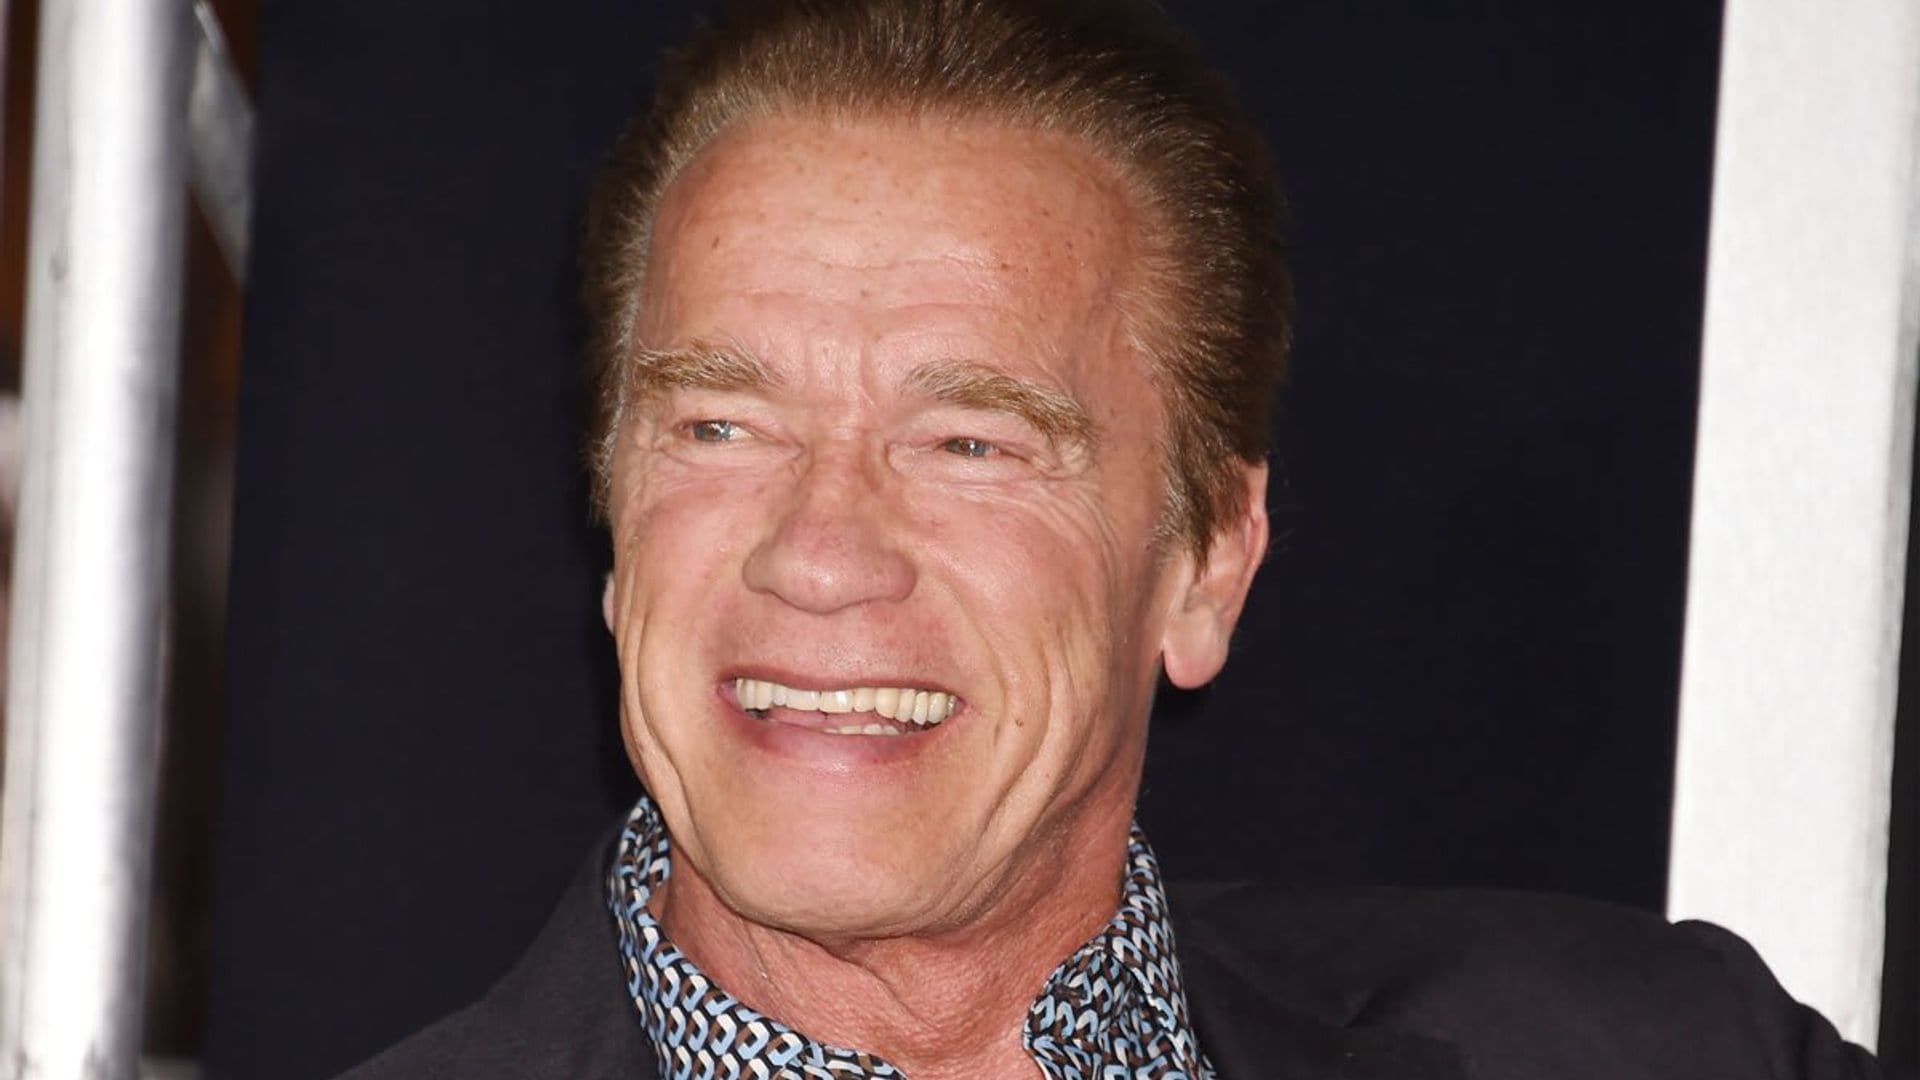 Arnold Schwarzenegger celebrates his birthday with his pet donkey and dog